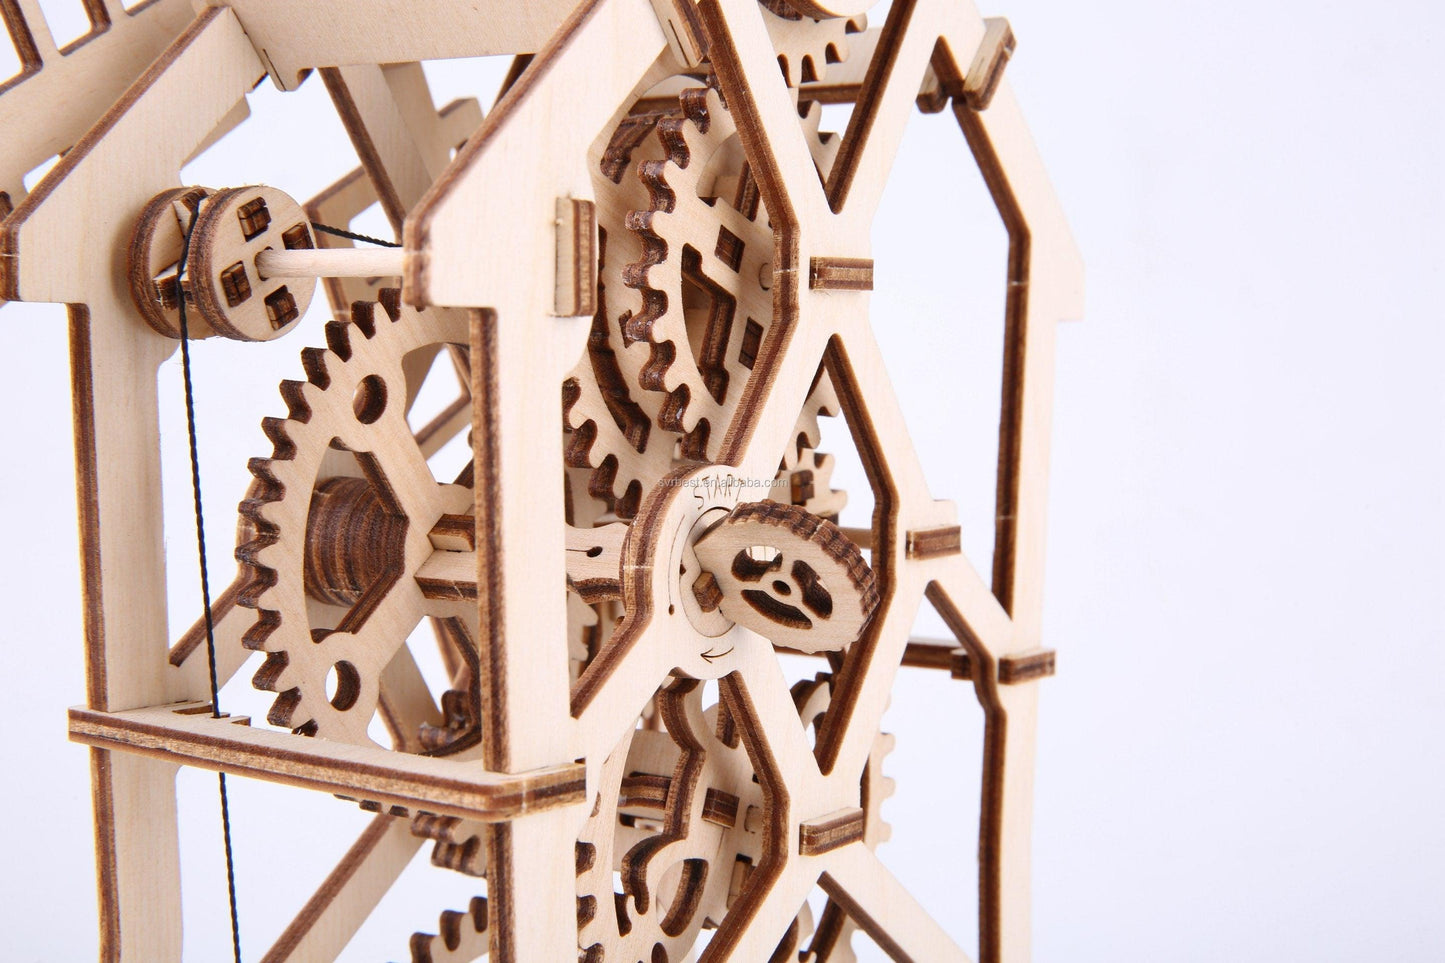 DIY Windmill Wooden Puzzle Kit - Mechanical Movement Windmill STEM Toy Kit - Windmill Miniature - DIY Wooden Puzzle Kit